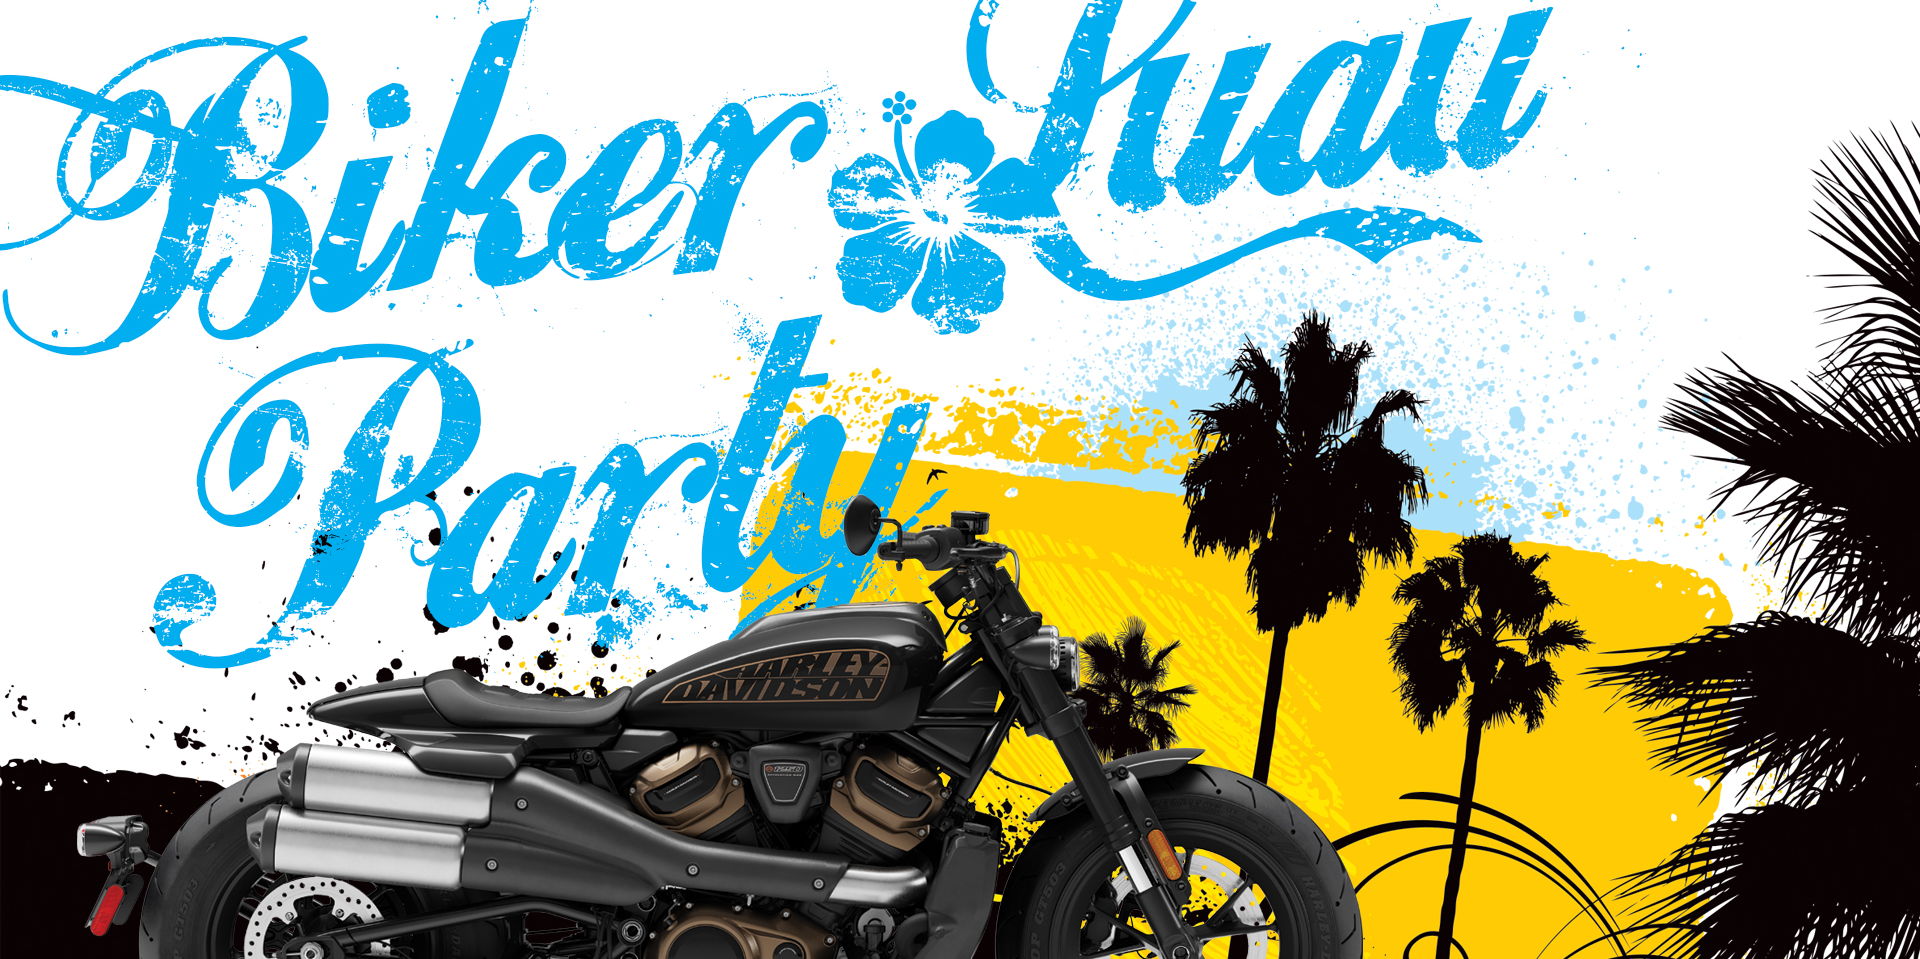 BIKER LUAU PARTY!!! promotional image